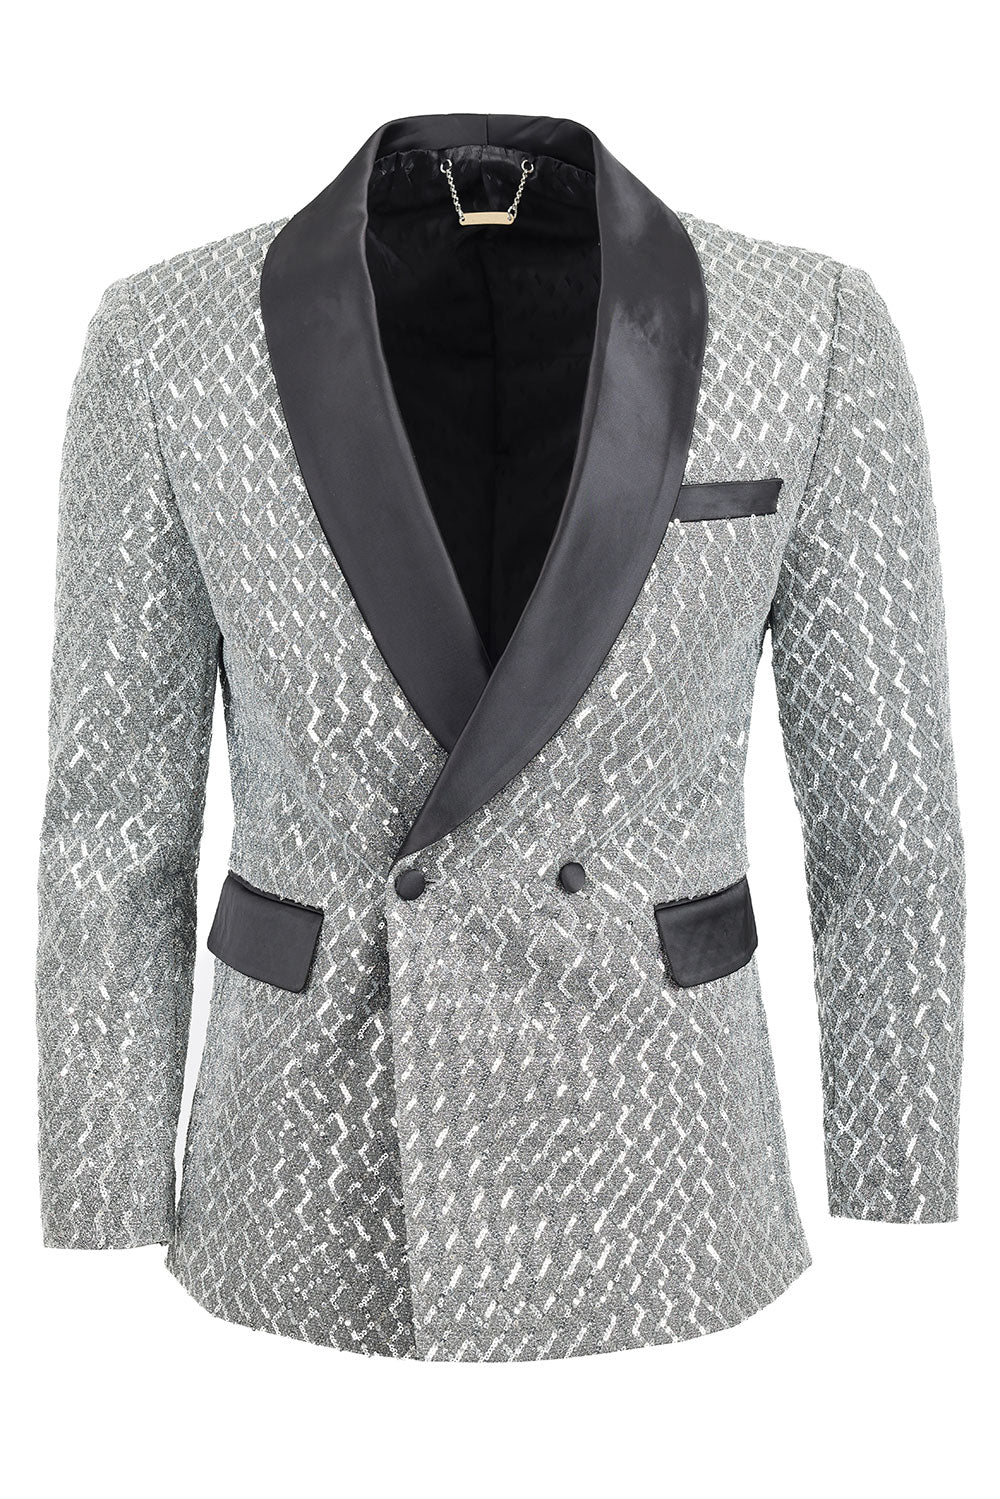 BARABAS men's shiny design glittery sequin design blazer BL3068 Silver